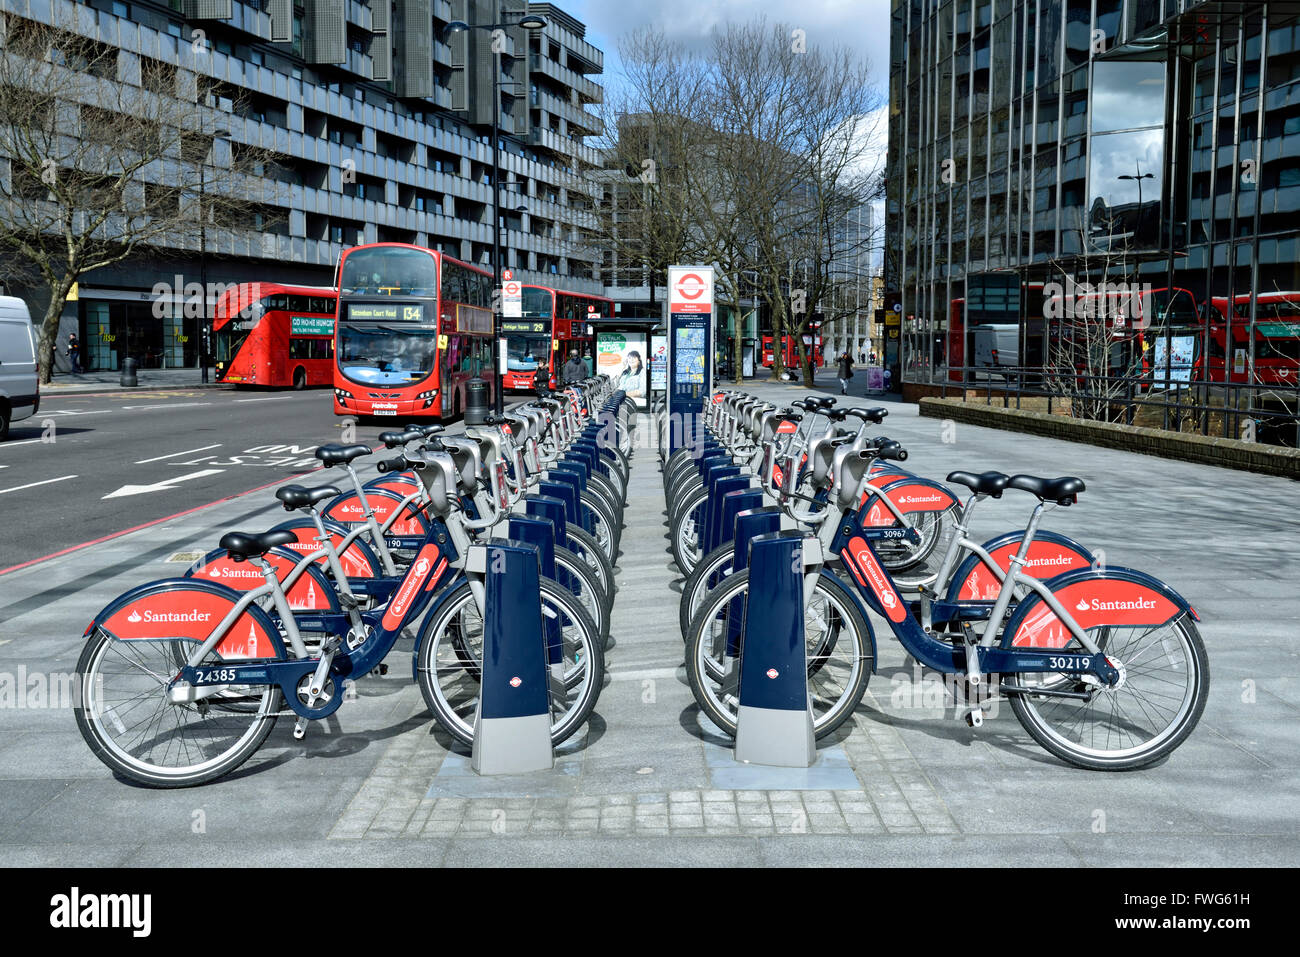 Santander cicli o Boris bike, noleggio biciclette sistema docking station, angolo di Hampstead Road e Euston Road, London Borough o Foto Stock